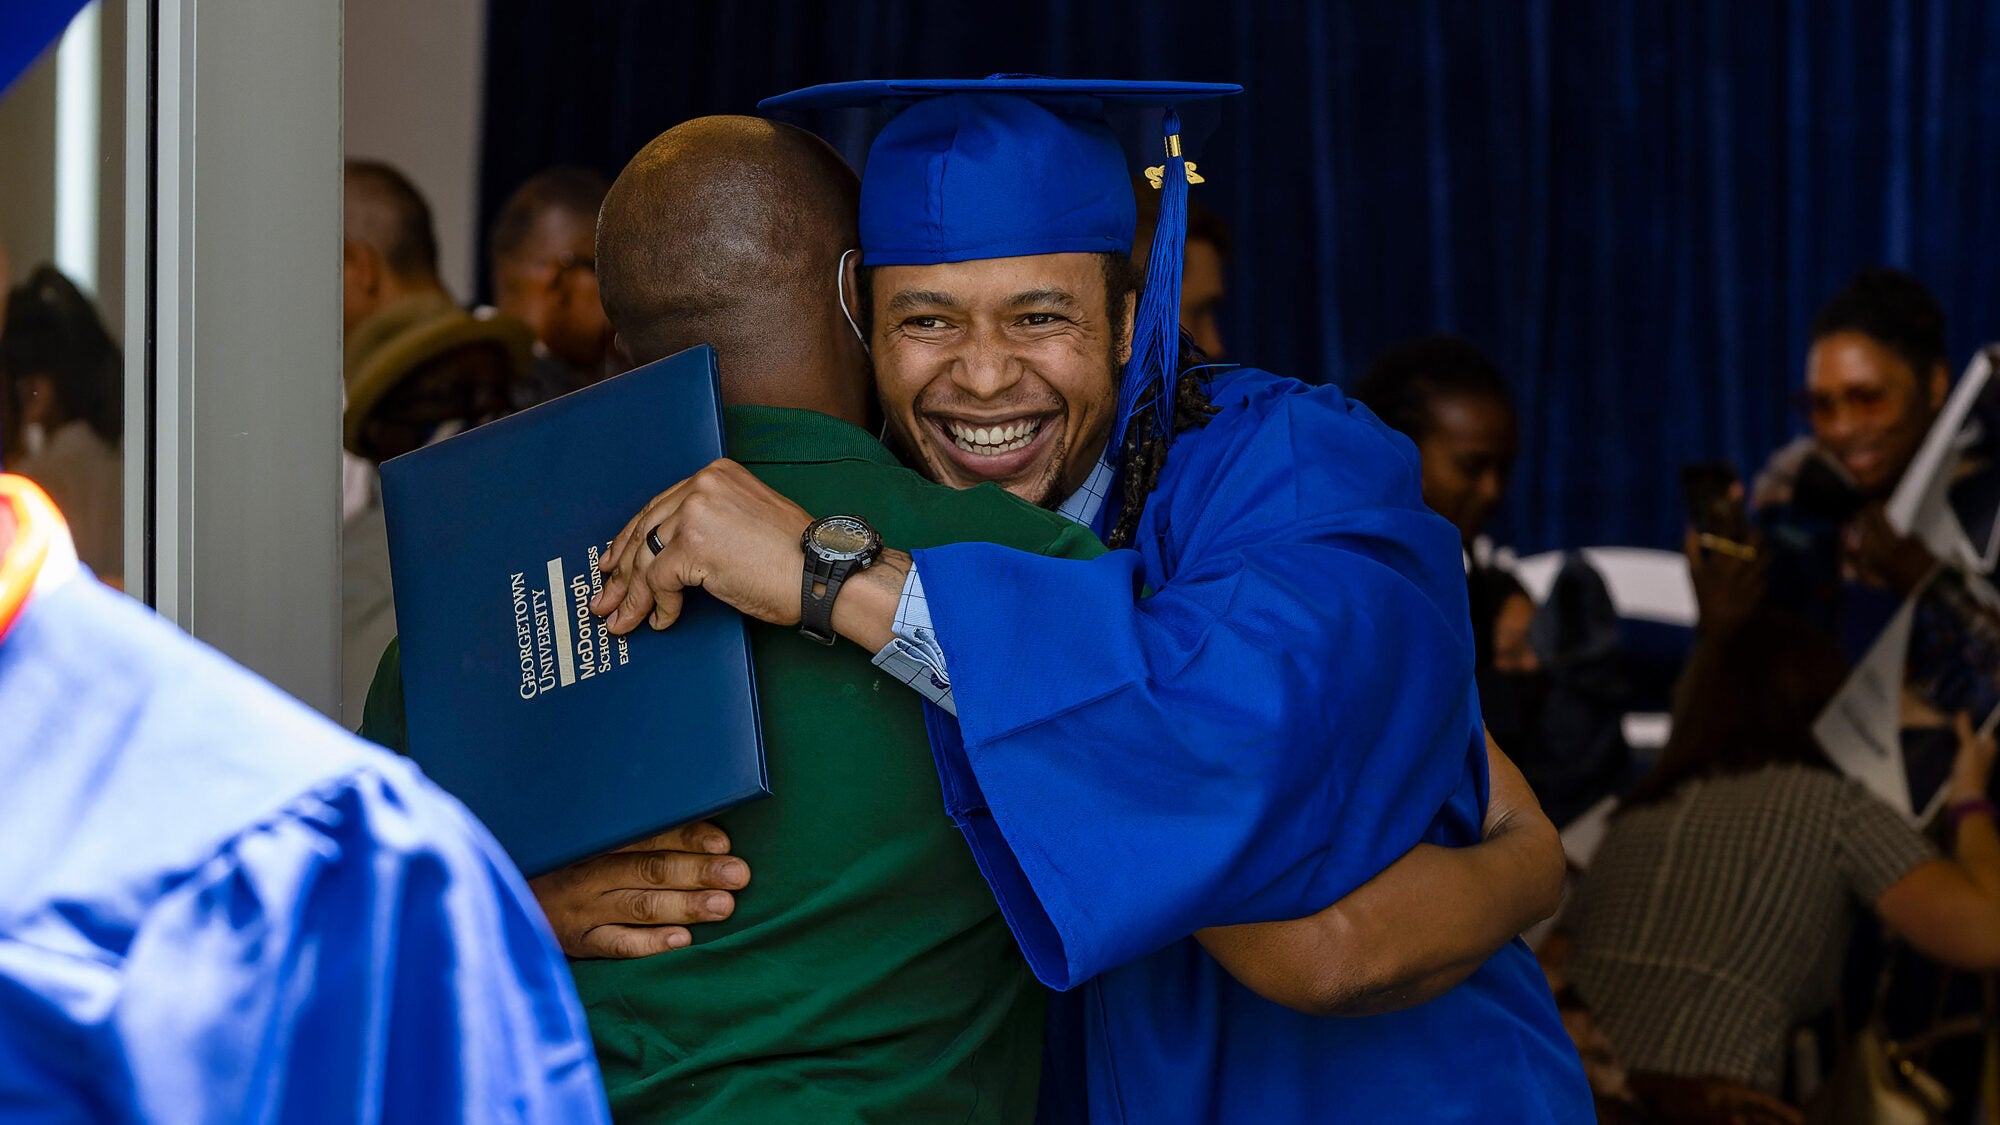 Pivot Program graduate hugs a supporter